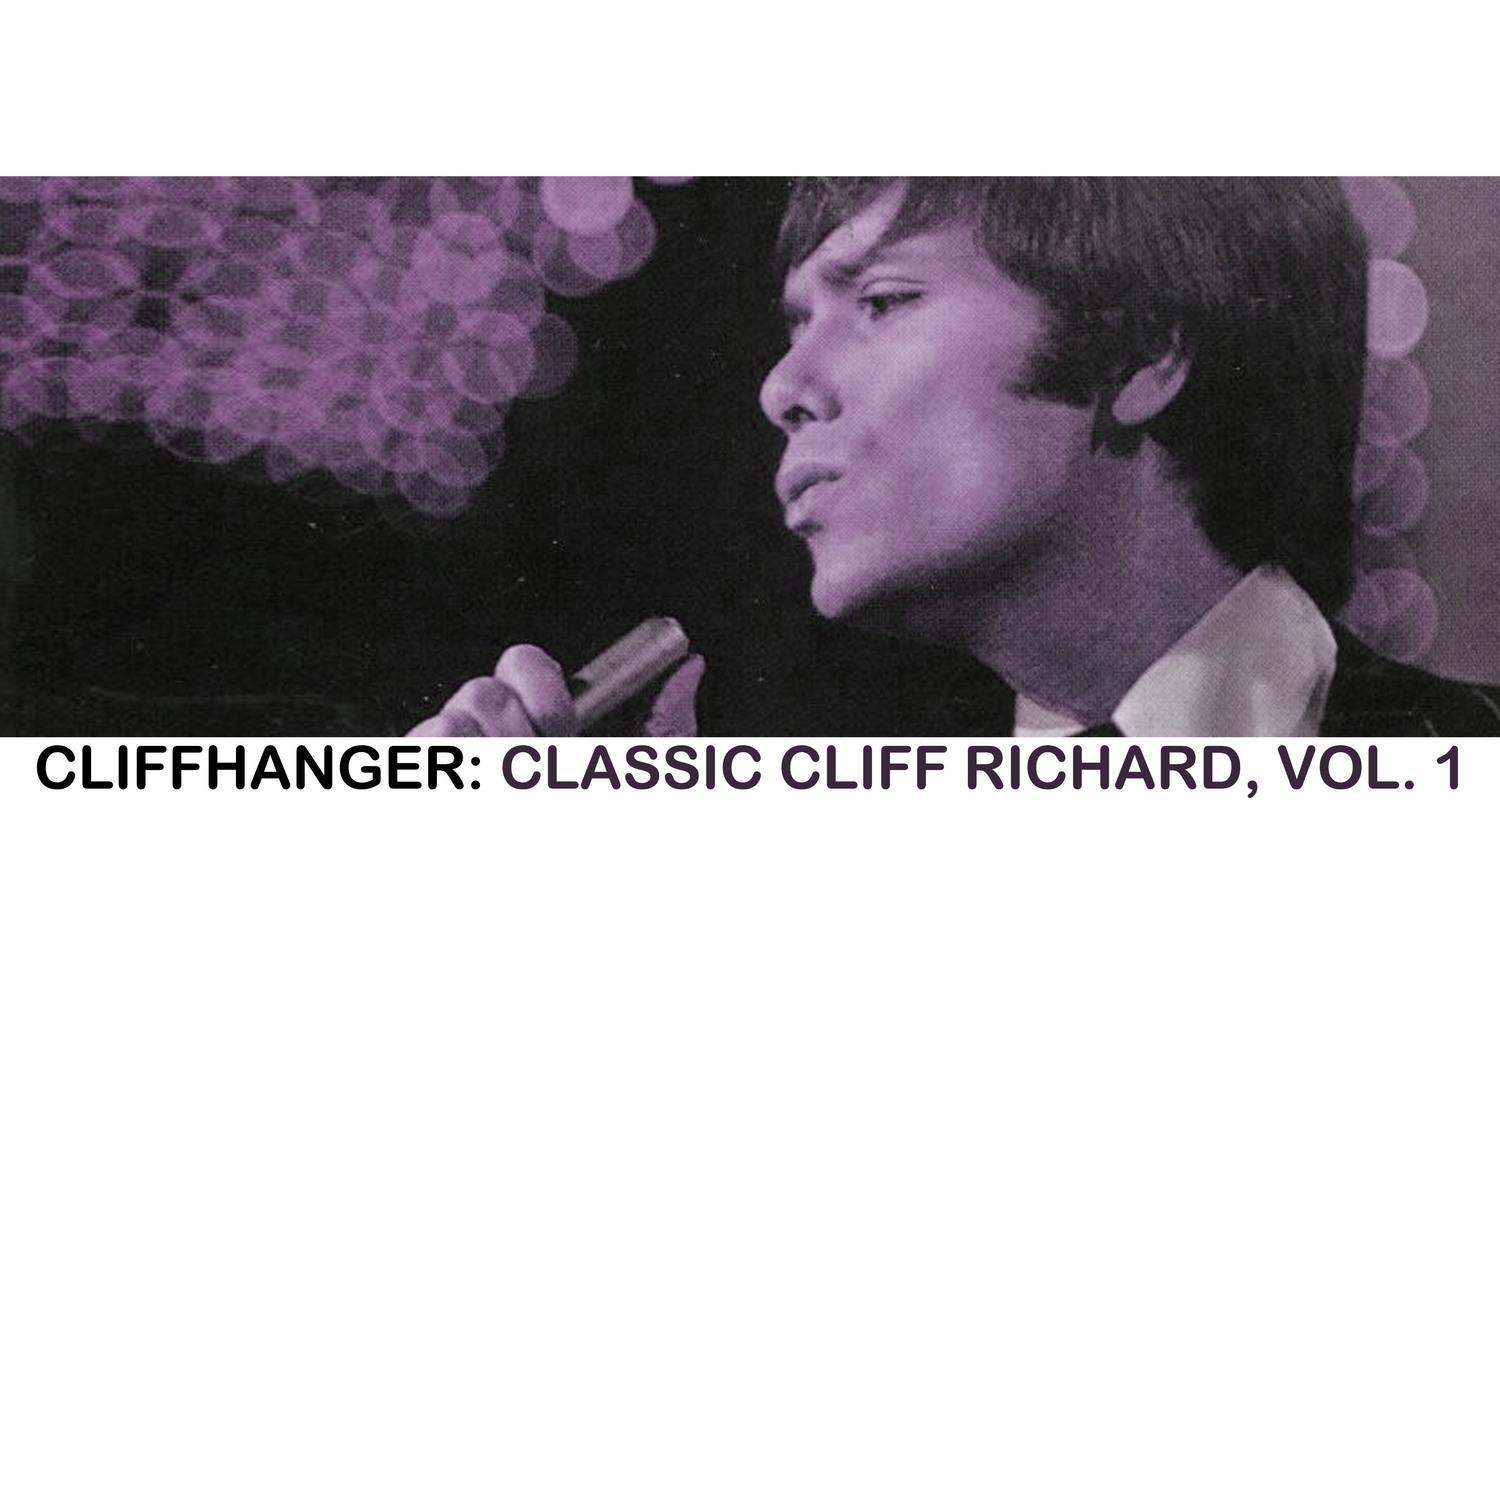 Cliffhanger: Classic Cliff Richard, Vol. 1